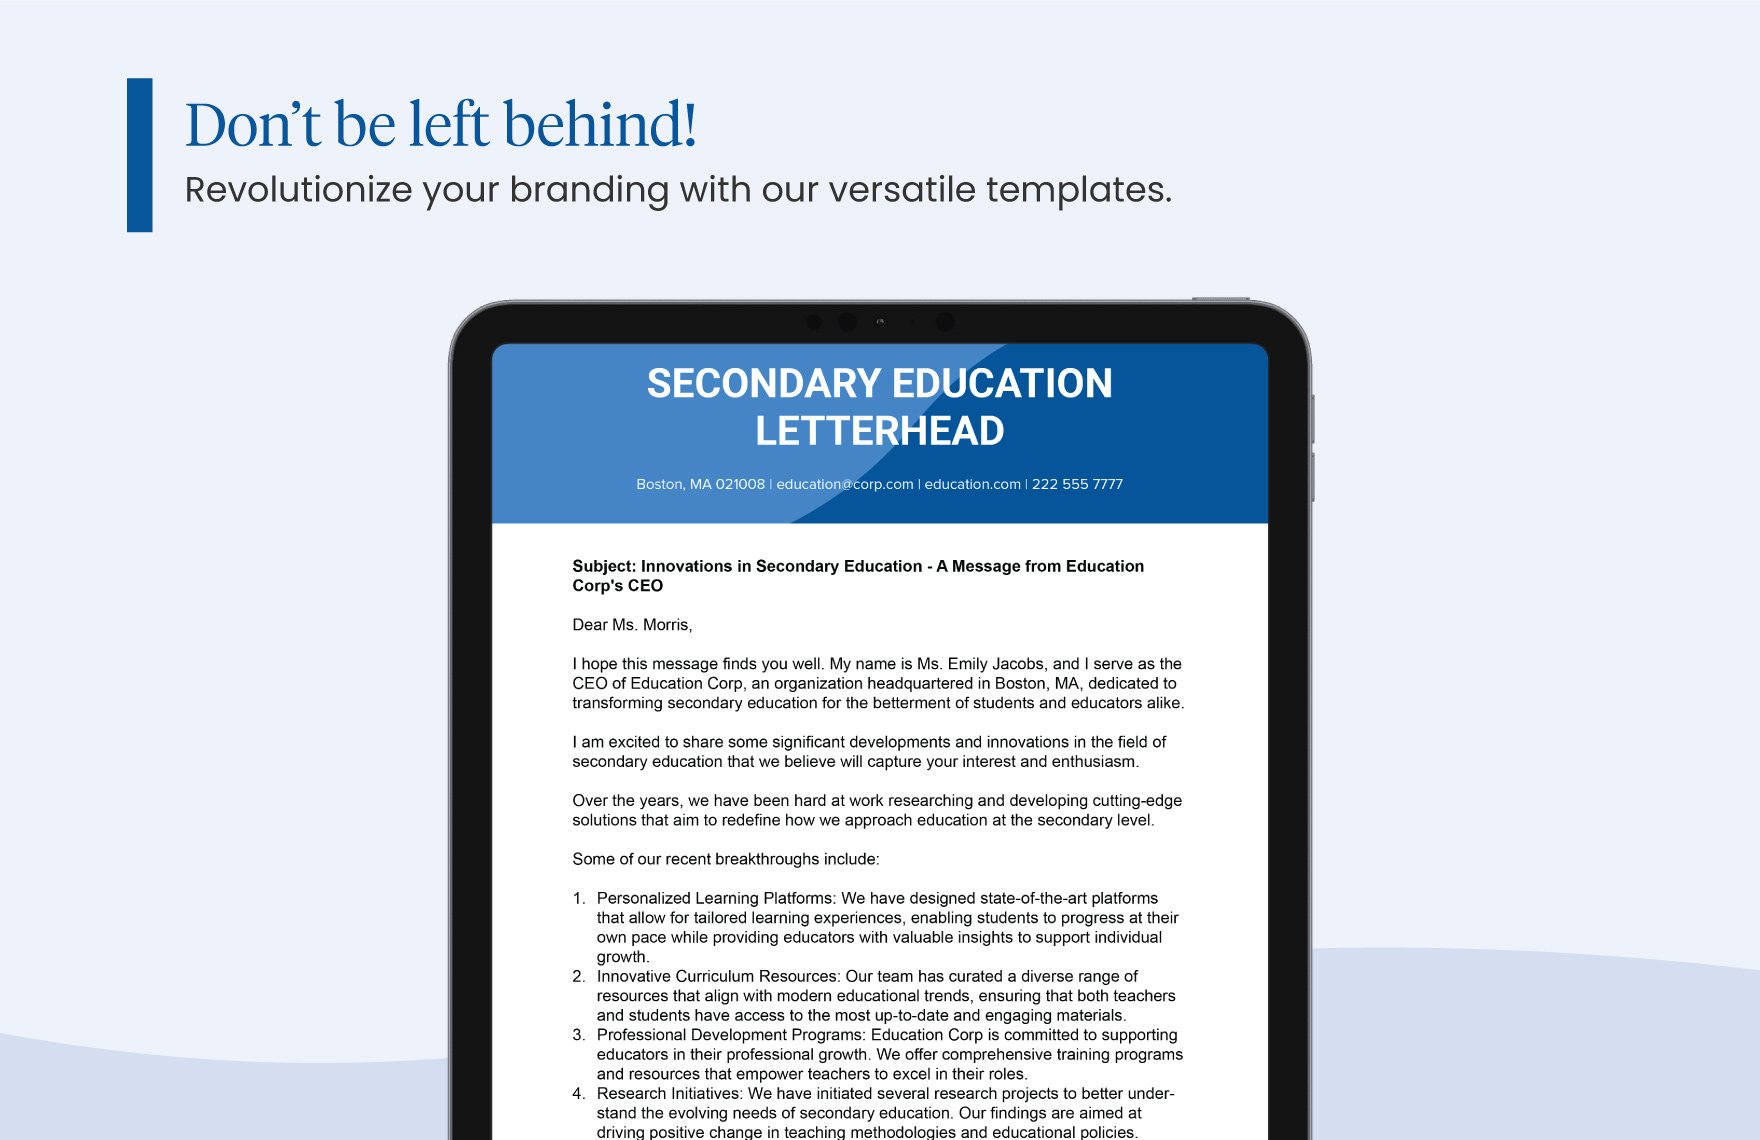 Secondary Education Letterhead Template